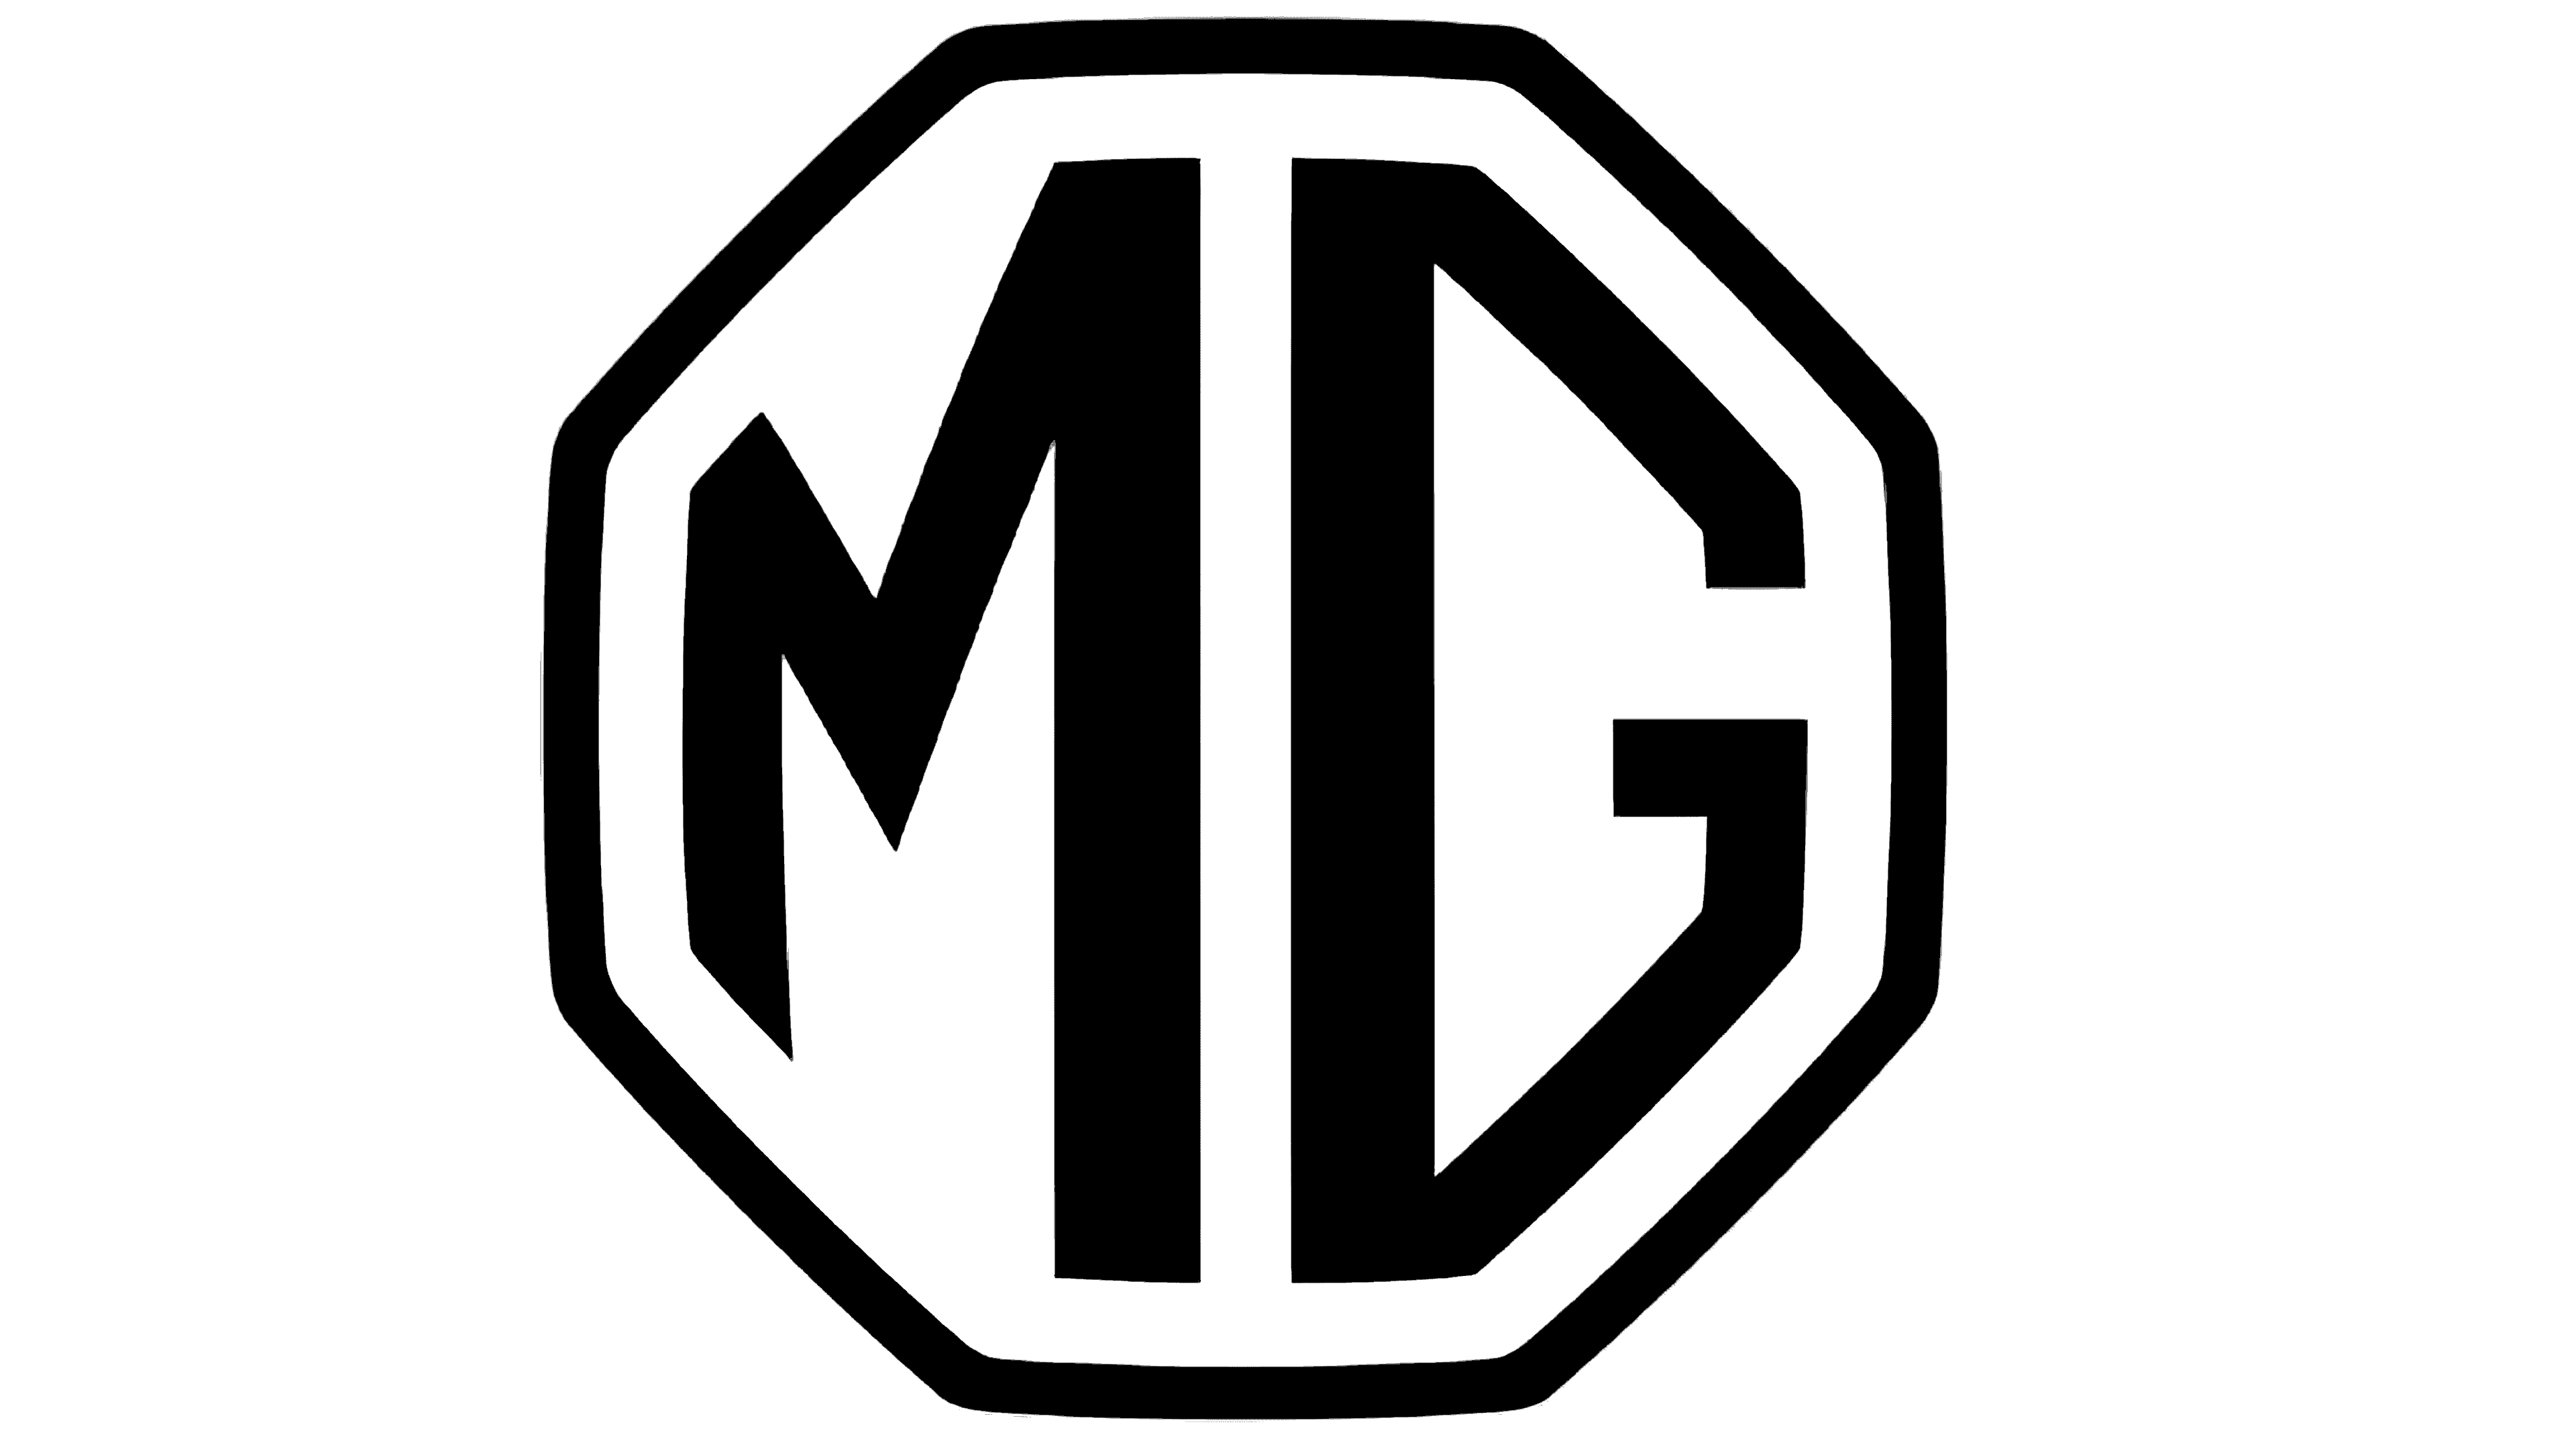 MG-Motor-Logo-2021-present